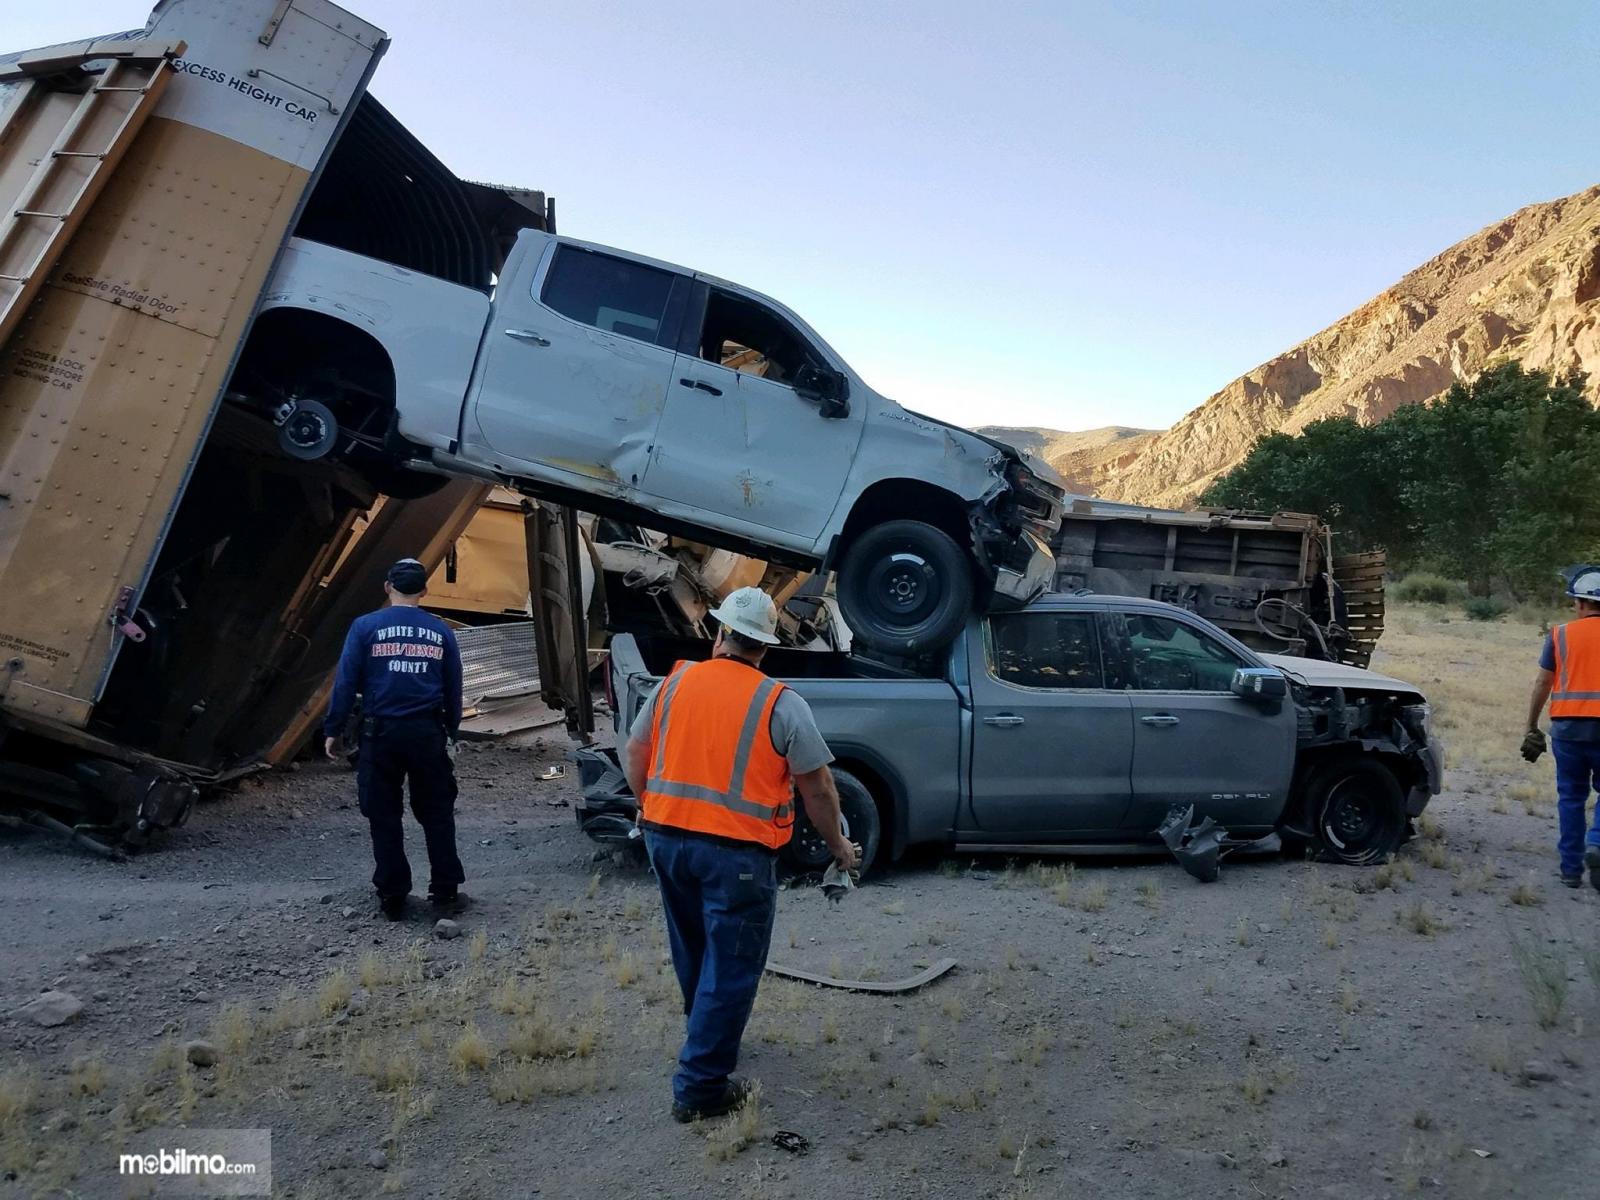 Foto menunjukkan sejumlah mobil mahal rusak parah dalam peristiwa kecelakaan kereta api di Nevada Amerika Serikat